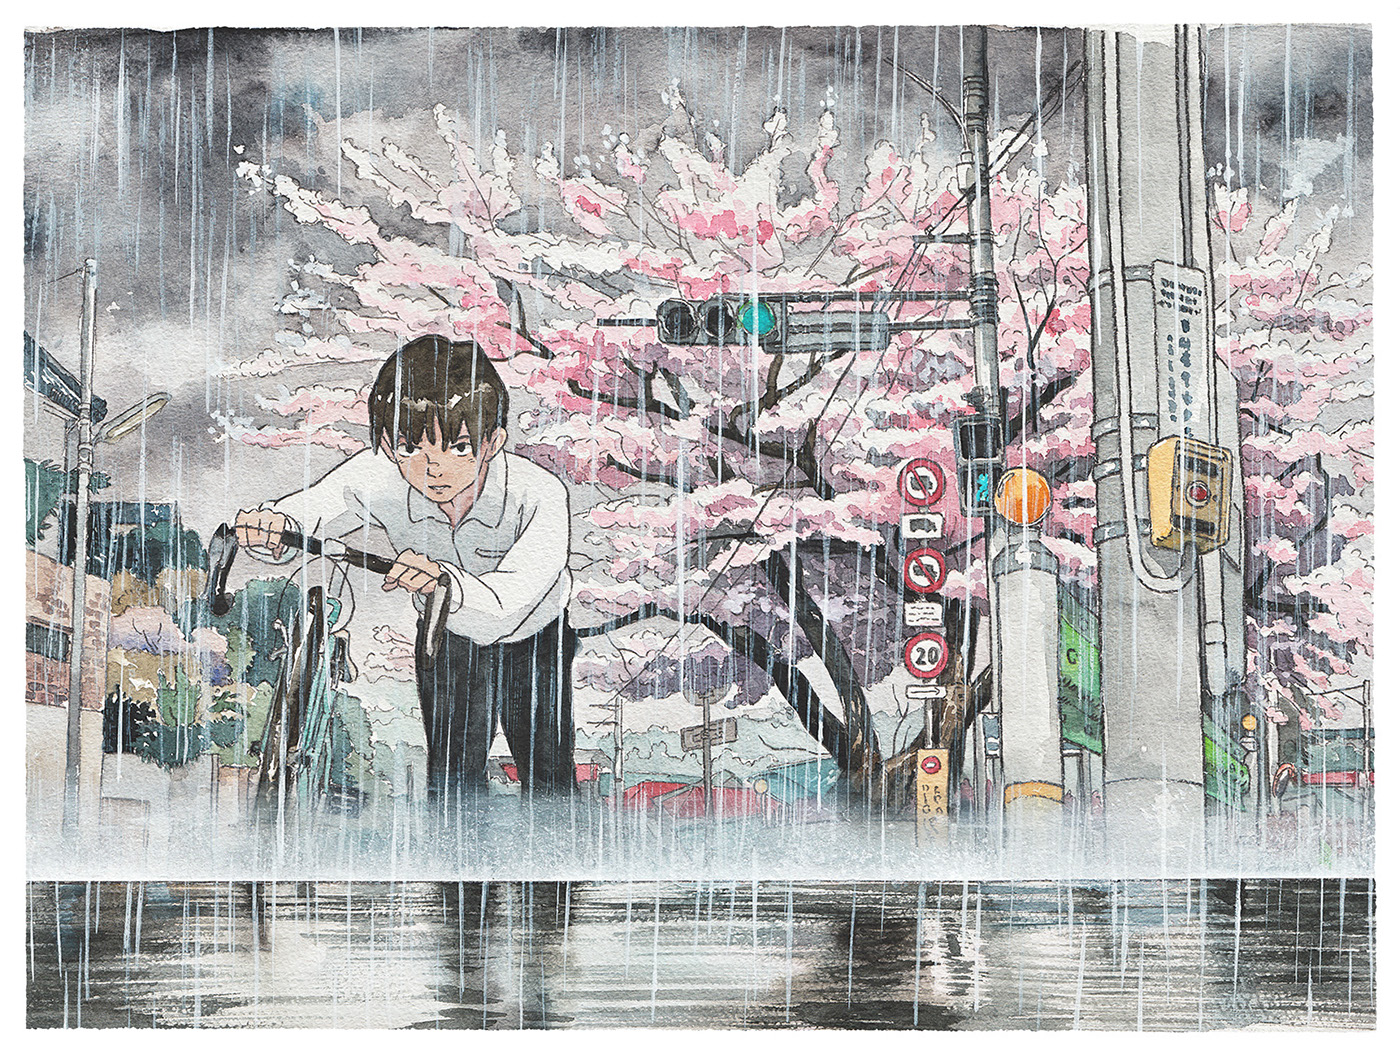 Adobe Portfolio boy Bicycle japan tokyo miyazaki Ghibli Watercolours watercolors analog hand Painted